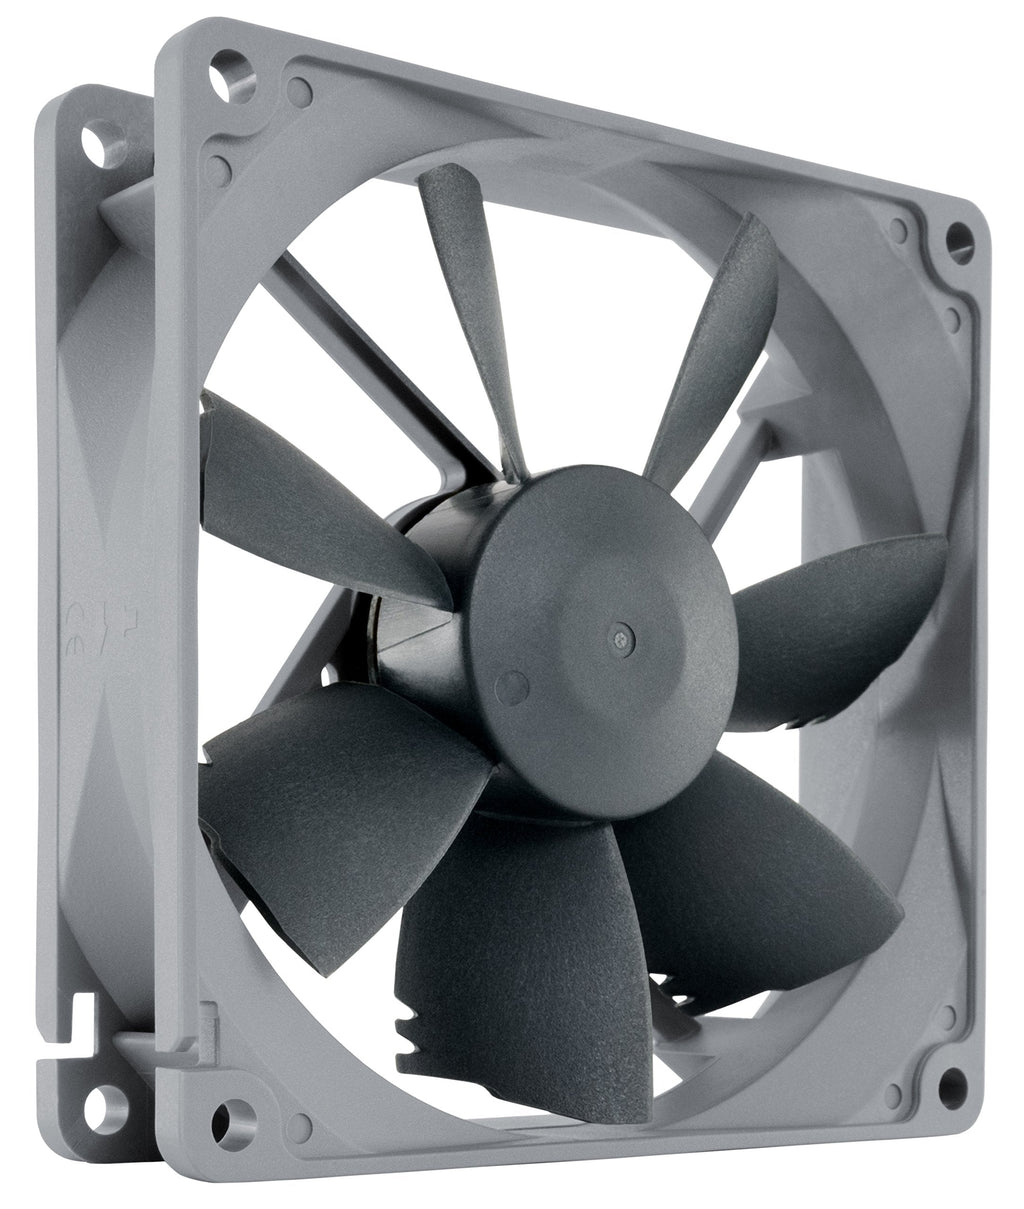  [AUSTRALIA] - Noctua NF-B9 redux-1600 PWM, High Performance Cooling Fan, 4-Pin, 1600 RPM (92mm, Grey)